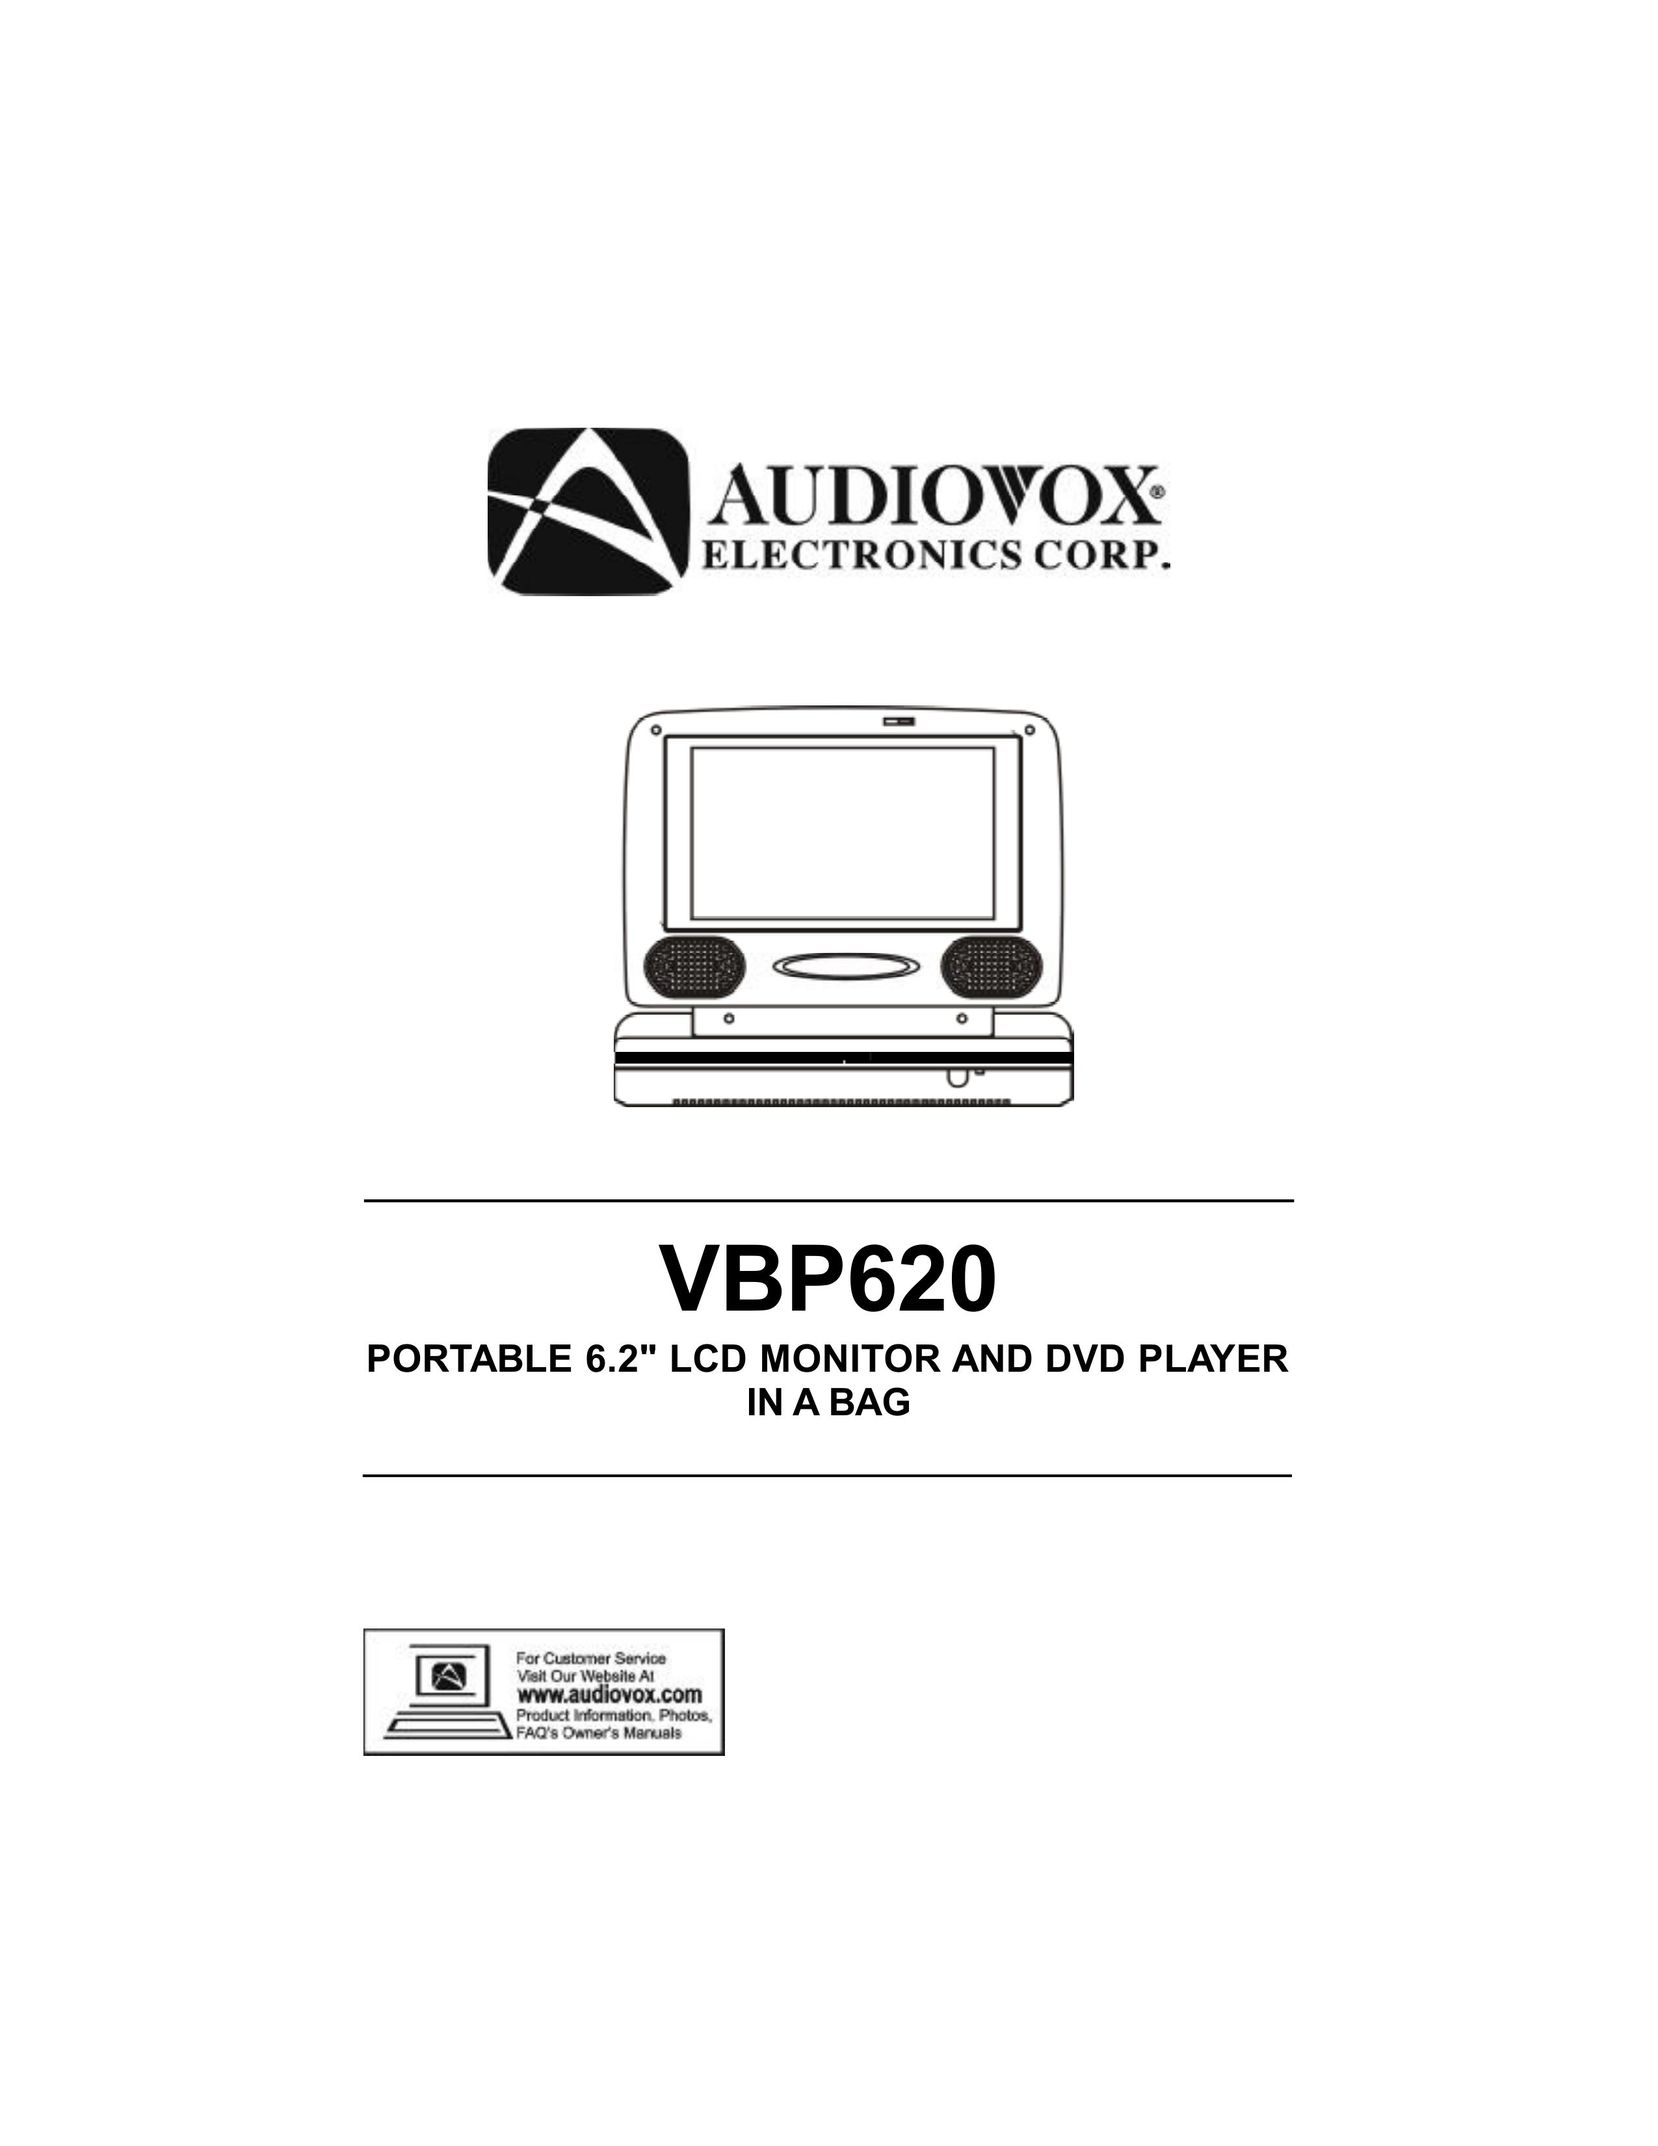 Audiovox VBP620 DVD Player User Manual